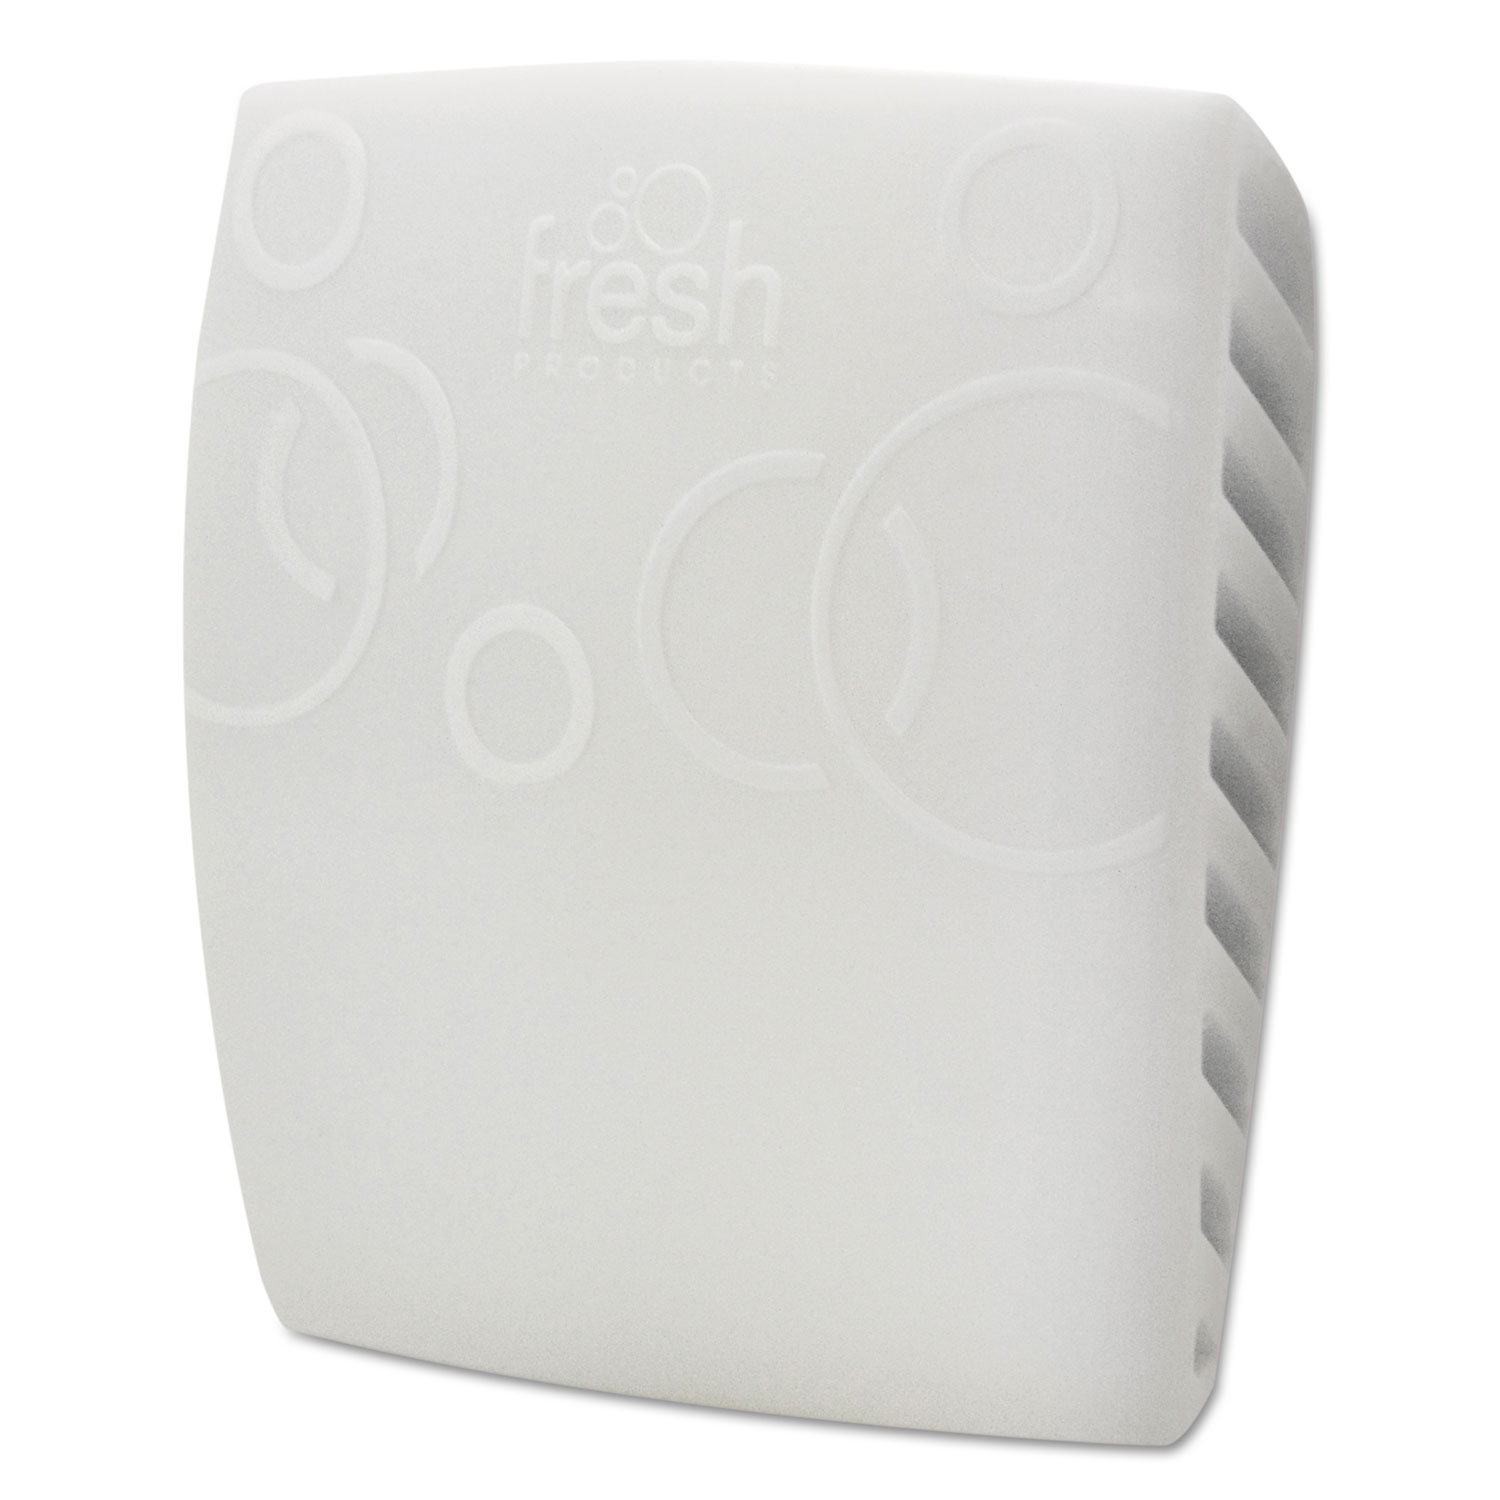 DoorFresh Air Freshener, Spring Rain, 2 oz Cartridge, 12/Box